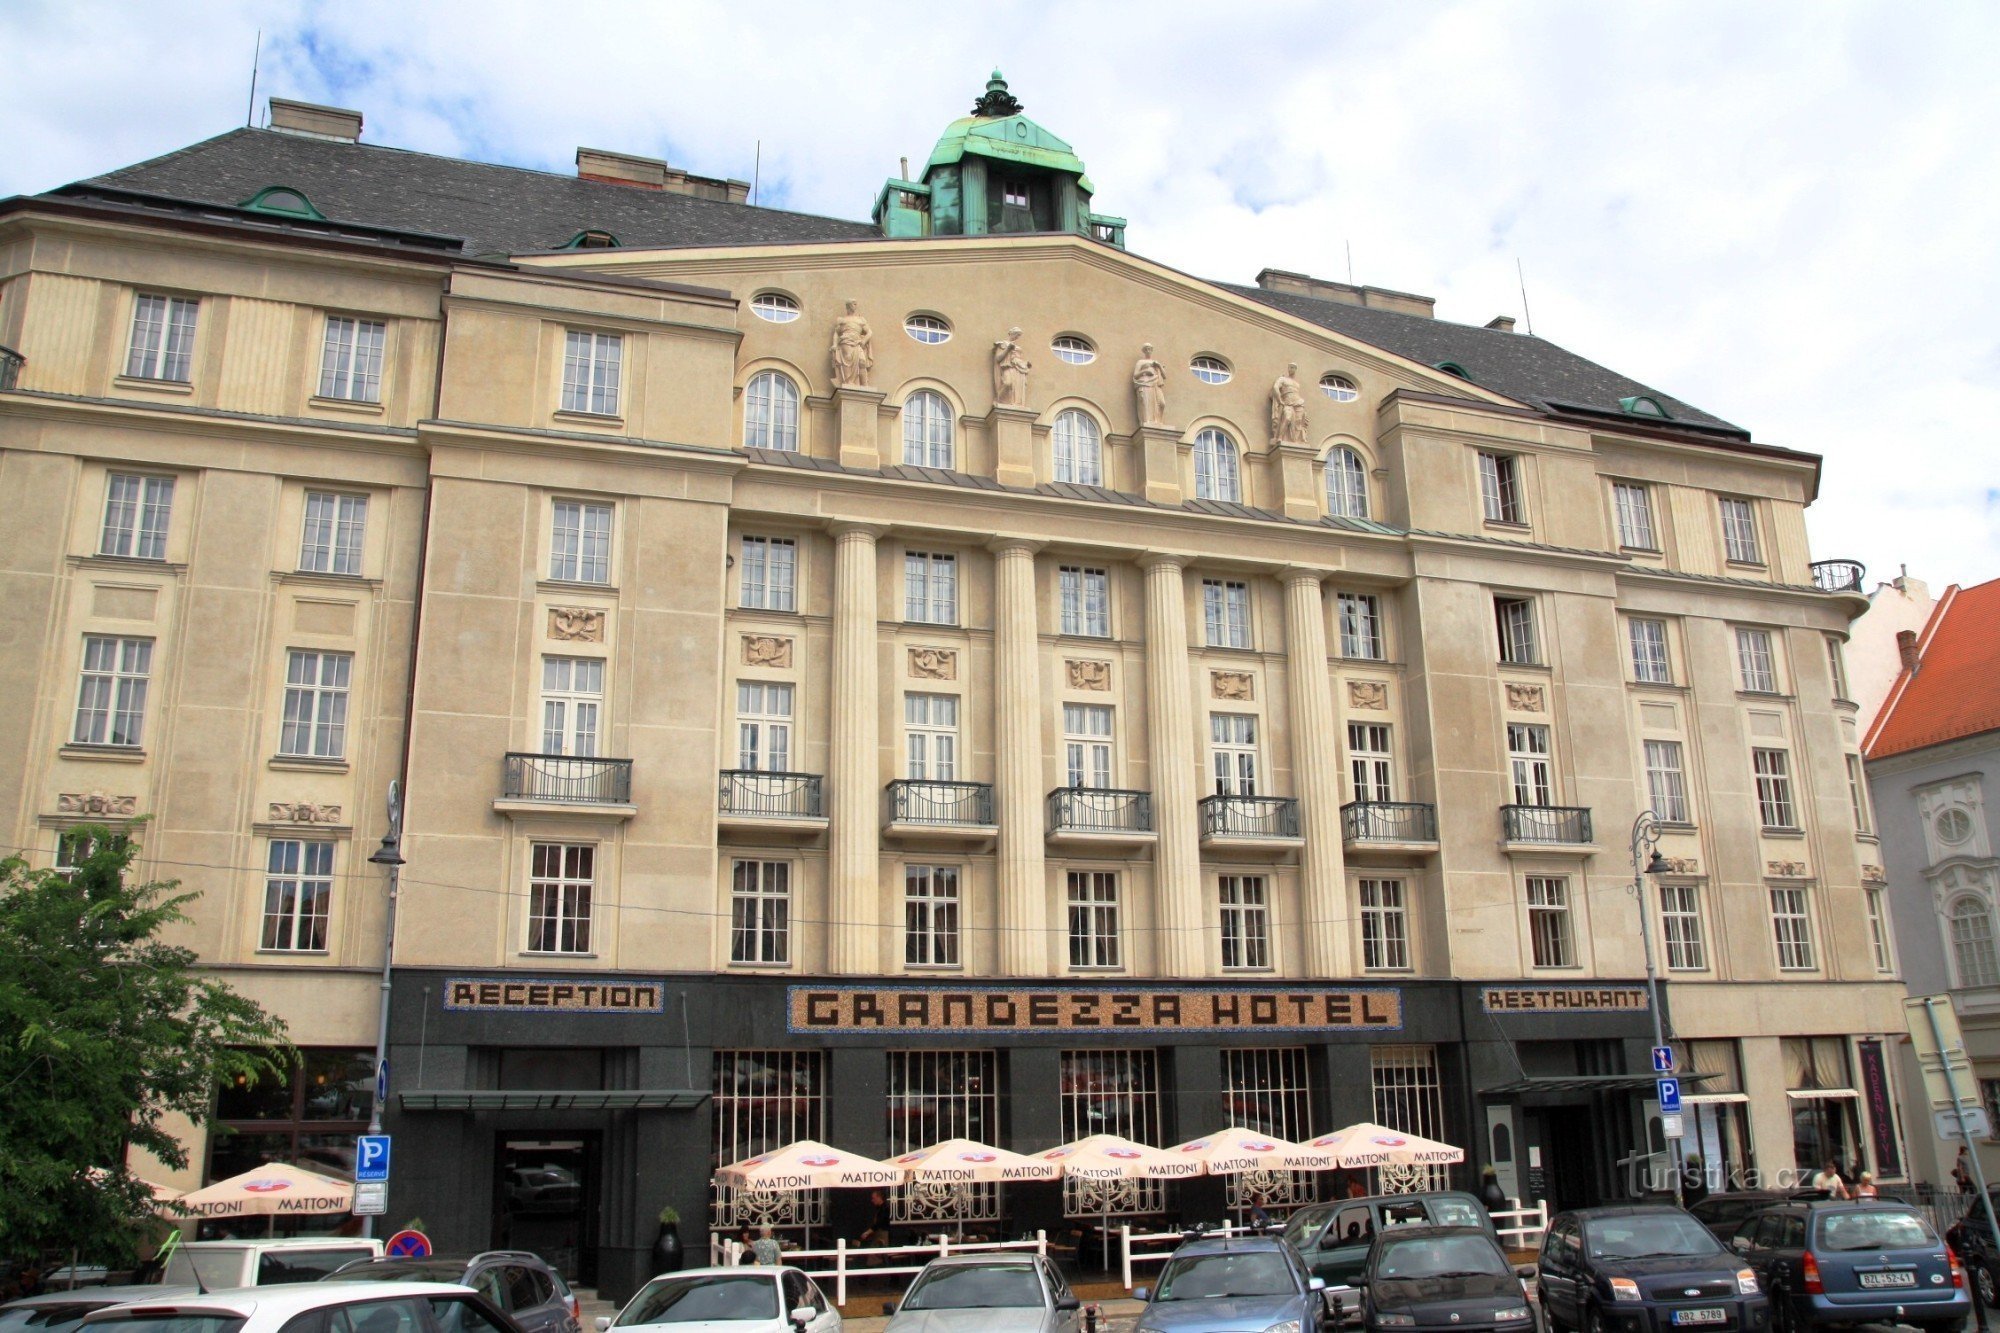 Brno - ehemalige Cyrilometodejská zálažna, heute Hotel Grandezza. Die Fassade des Gebäudes po